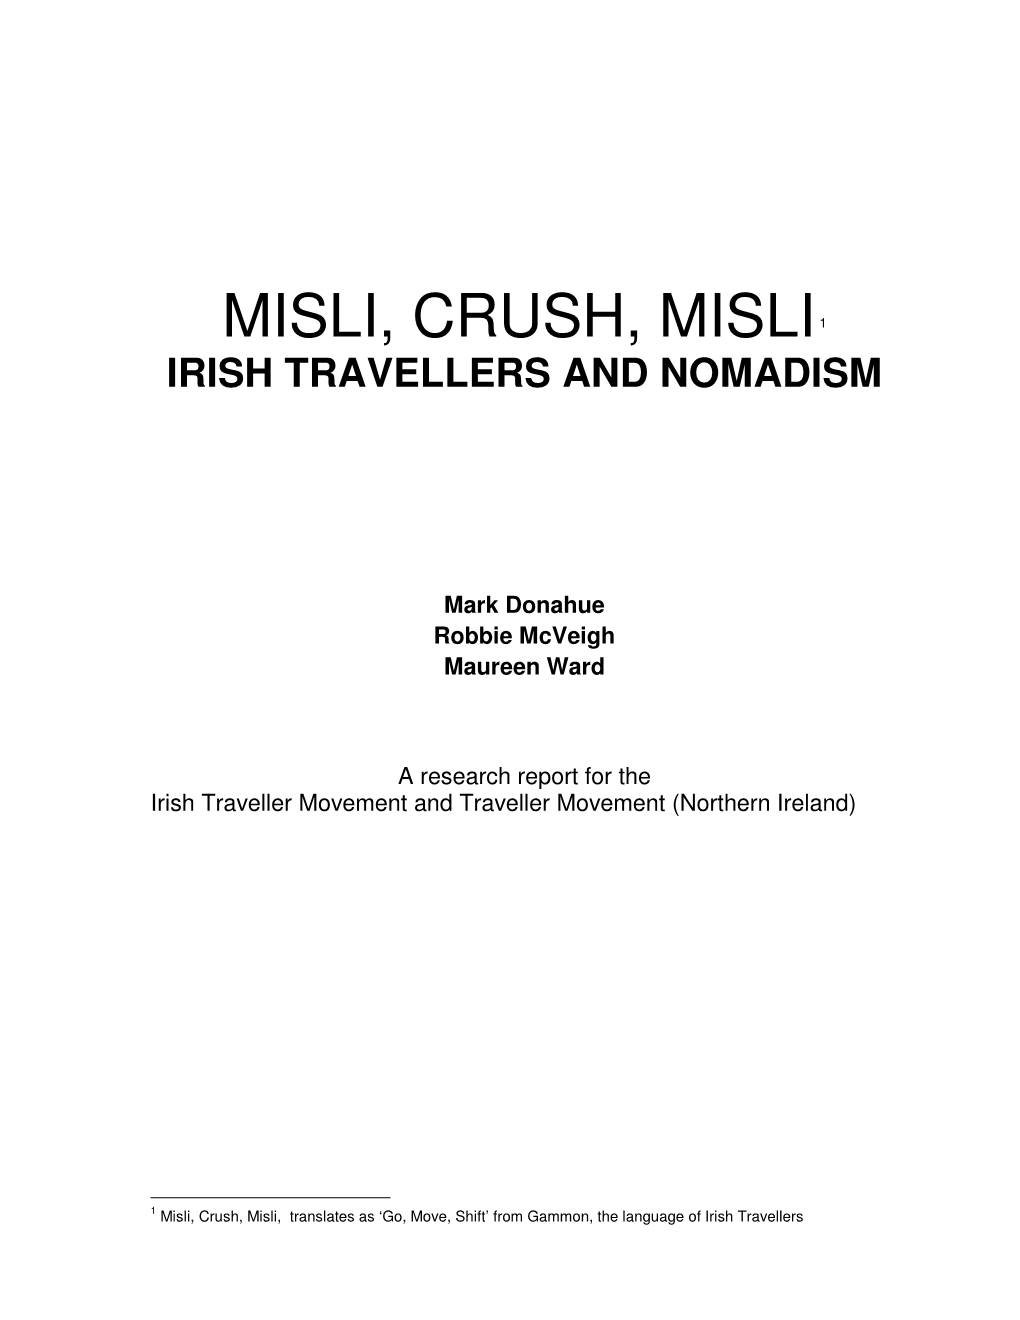 MISLI-CRUSH-MISLI Irish Travellers and Nomadism